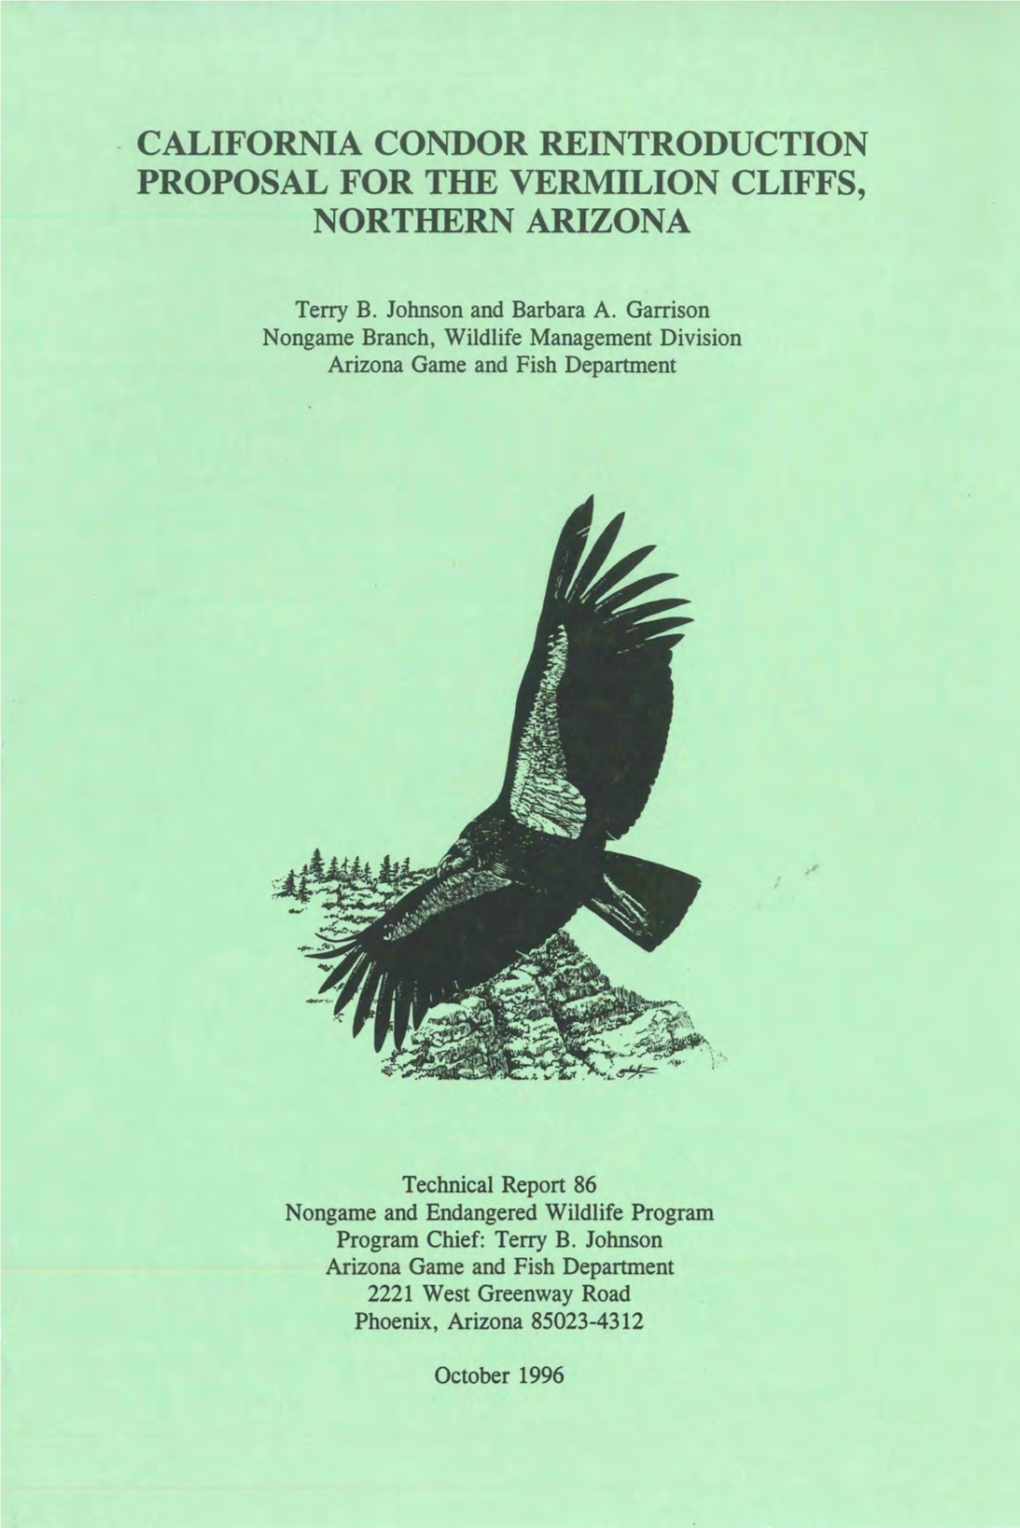 California Condor Reintroduction Proposal for the Vermilion Cliffs, Northern Arizona